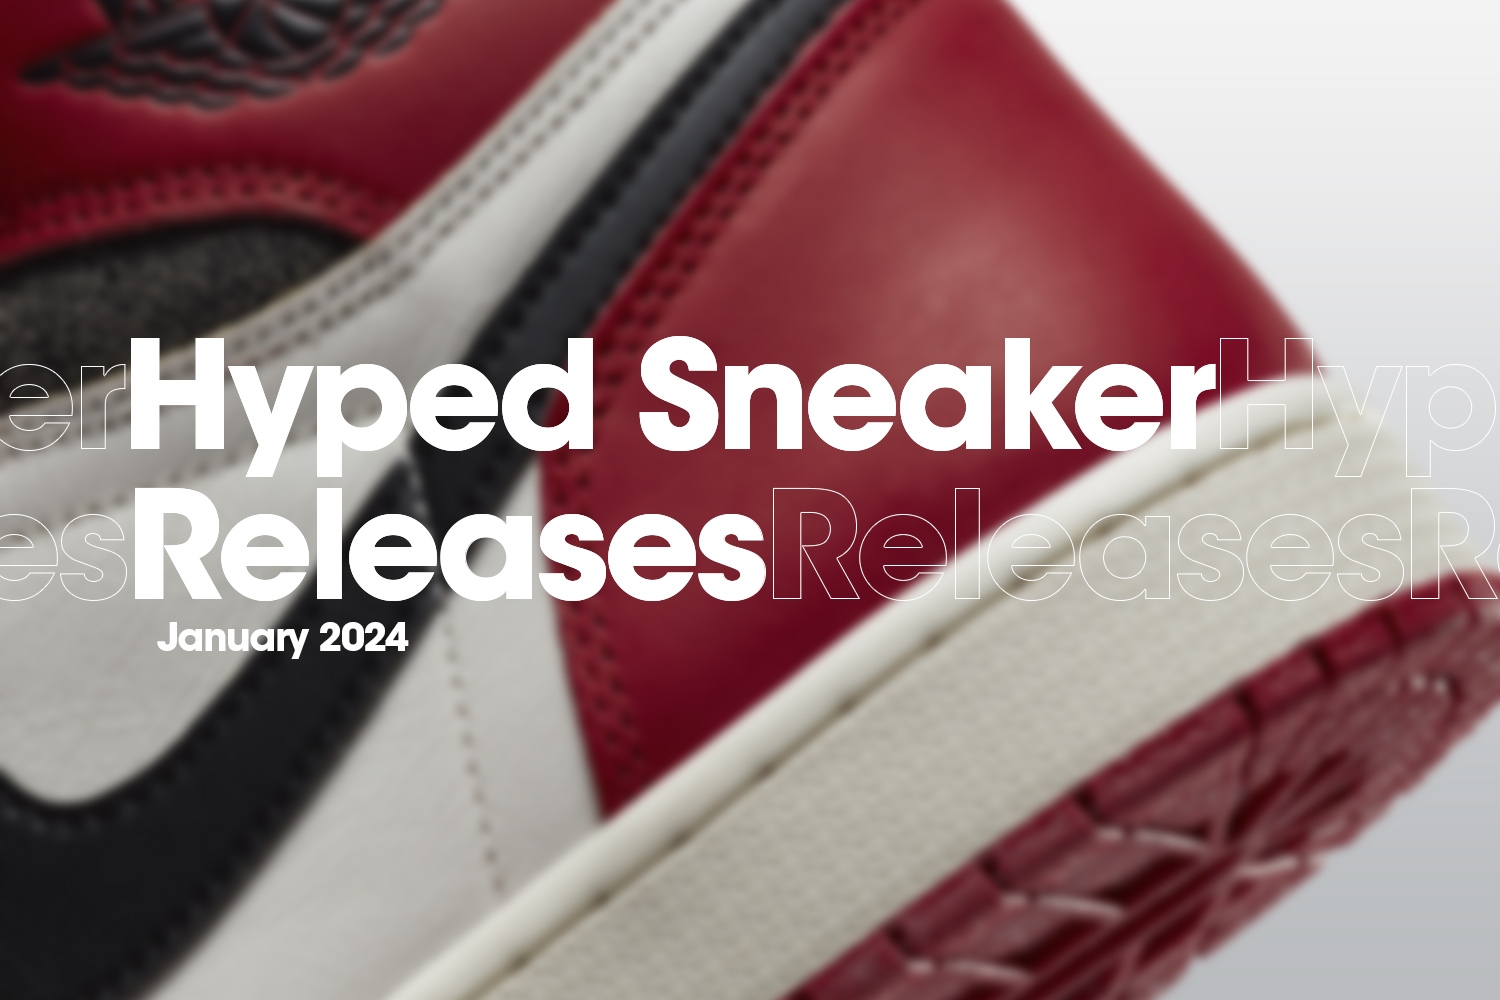 Hyped Sneaker Releases van januari 2024